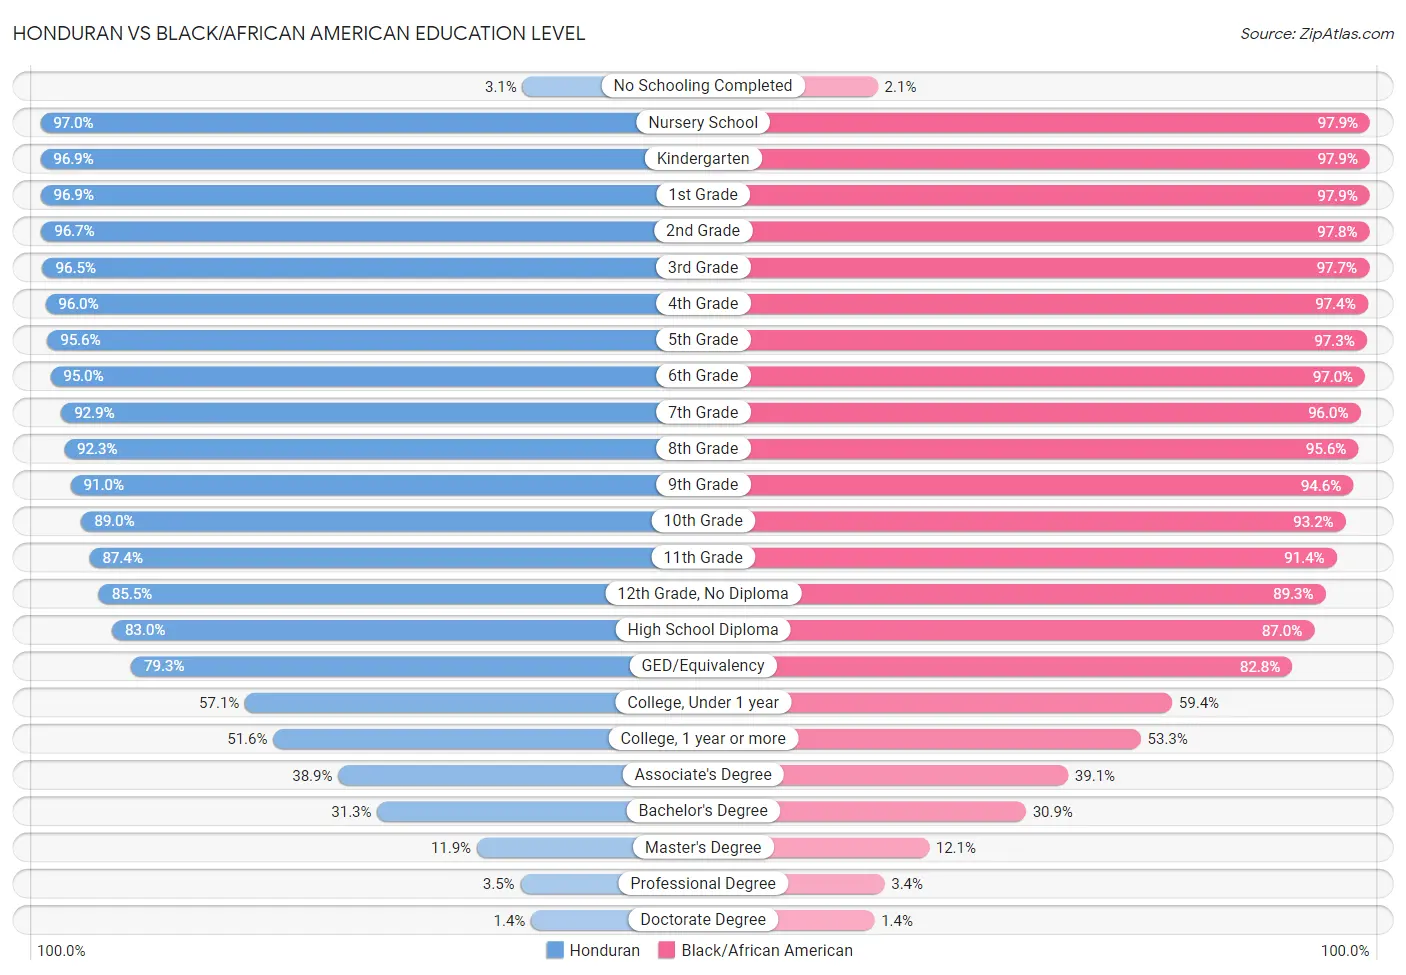 Honduran vs Black/African American Education Level